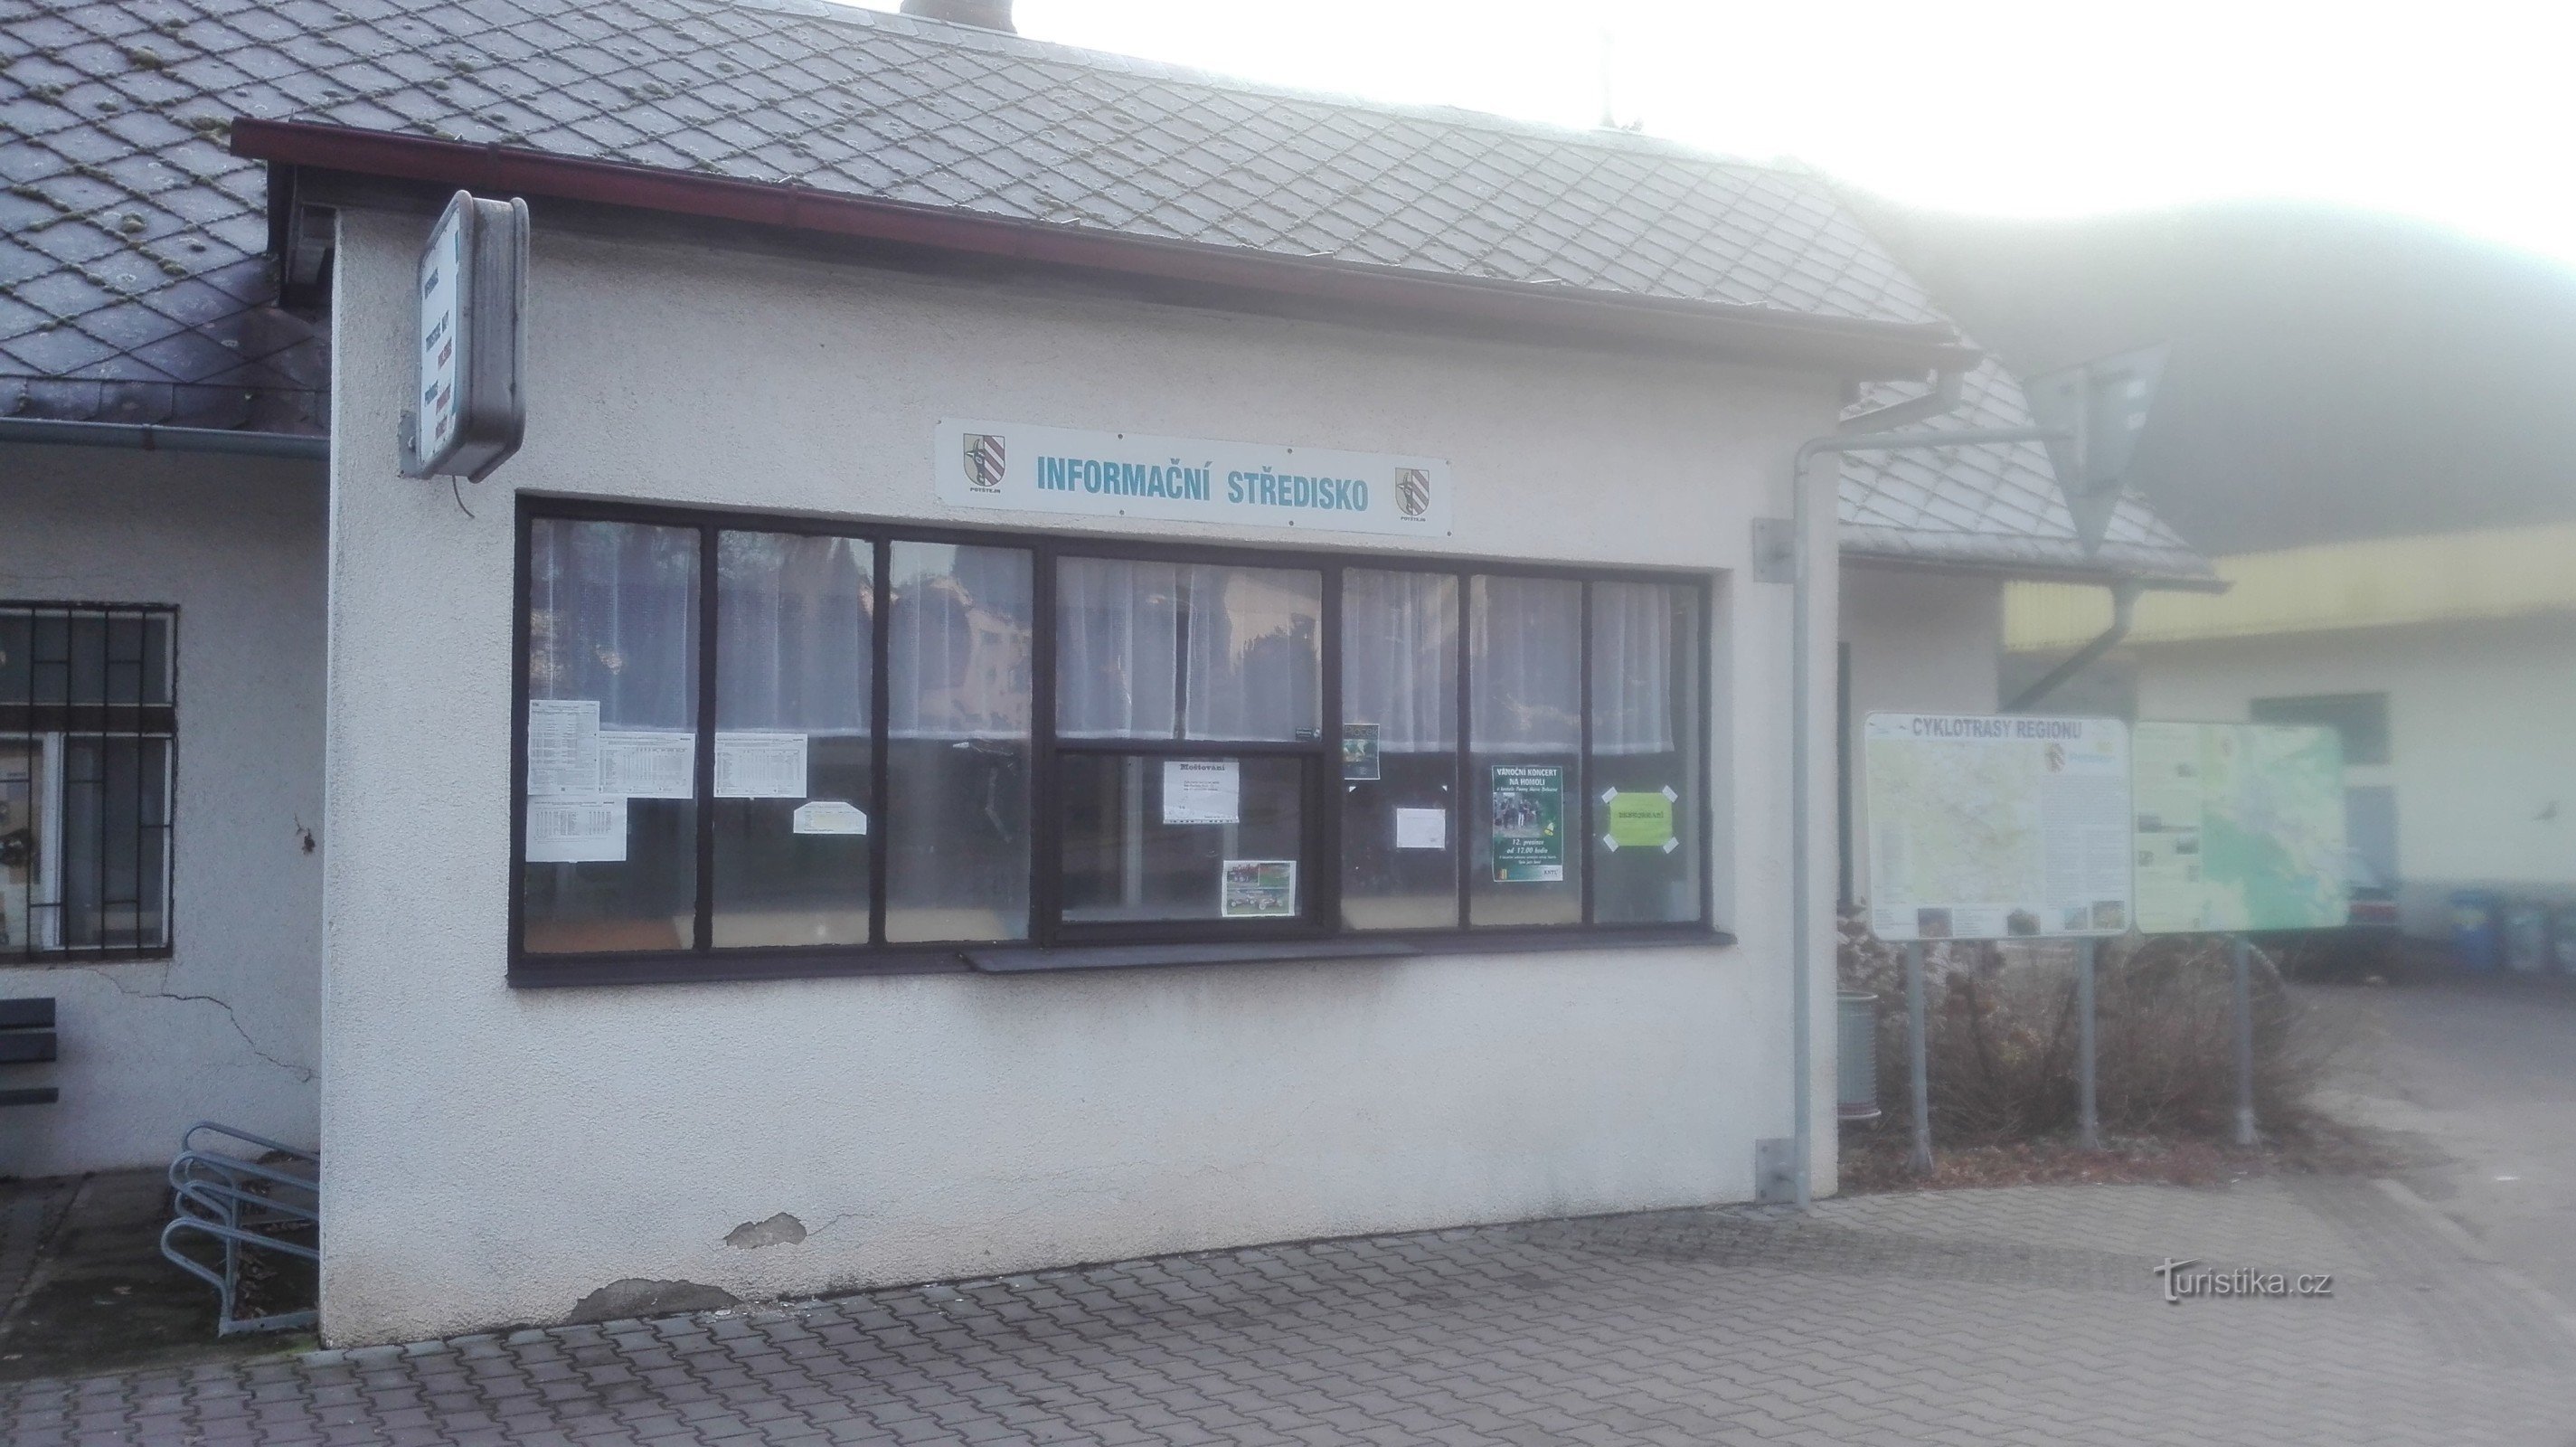 Potštejn - centre d'information